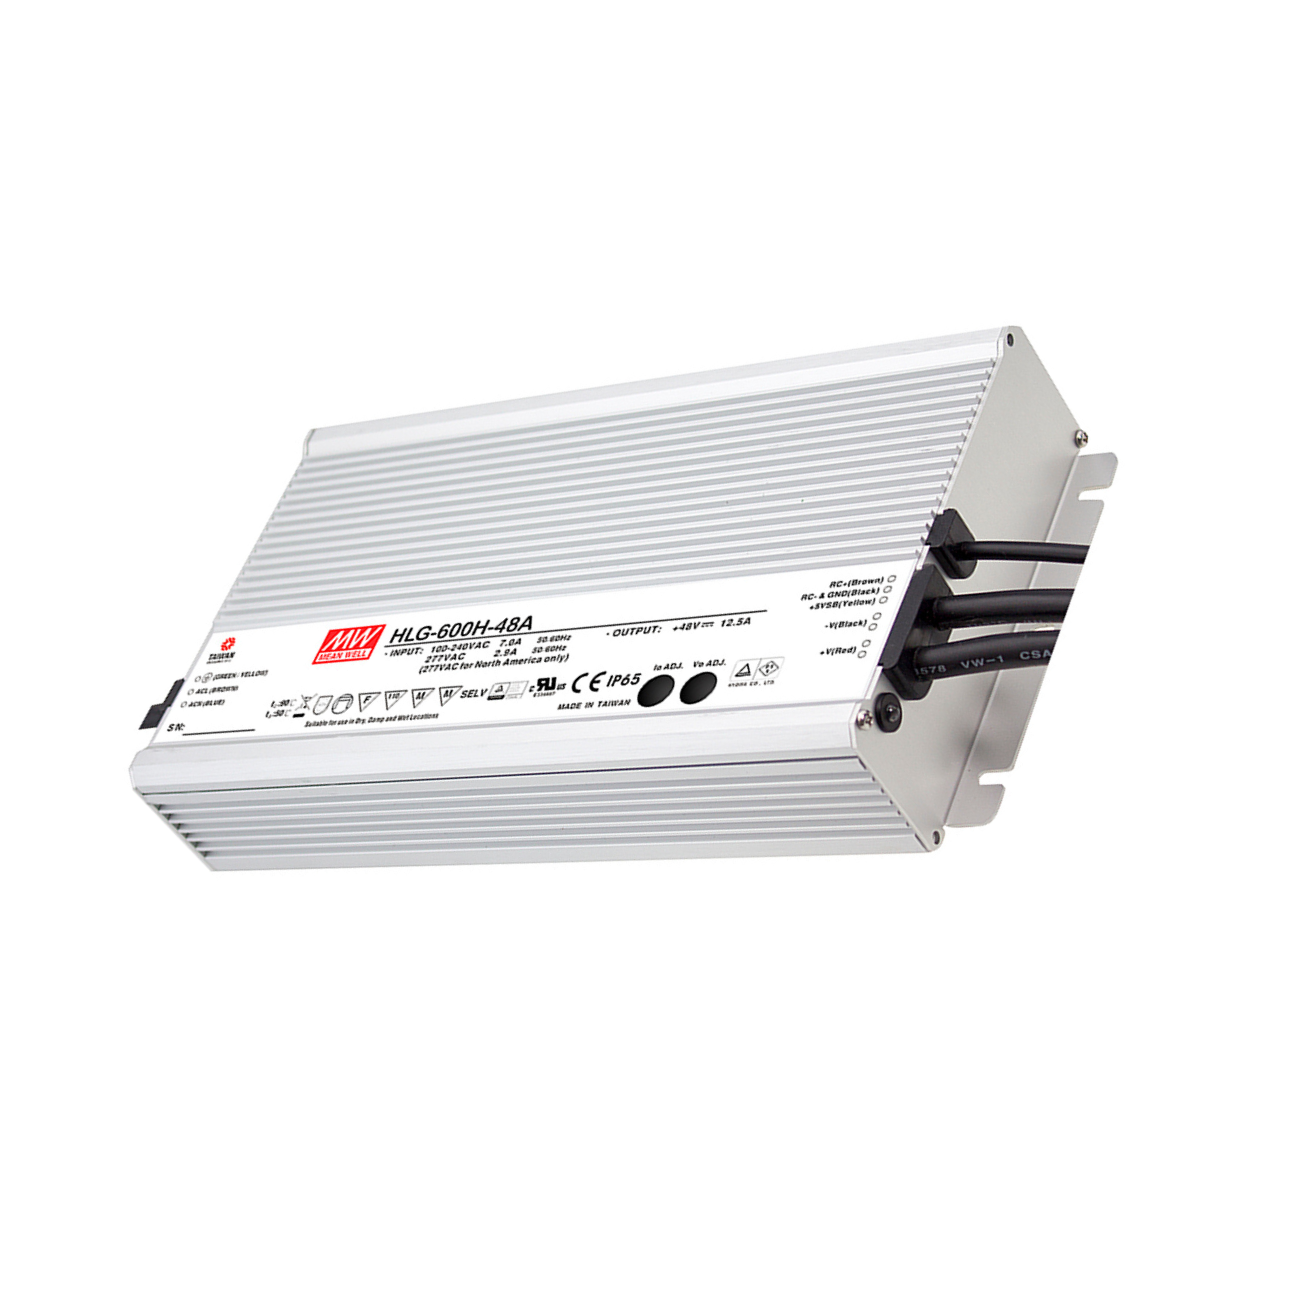 MeanWell HLG-600H-48AB (600W/12,5V) LED-Netzteil (dimmbar)